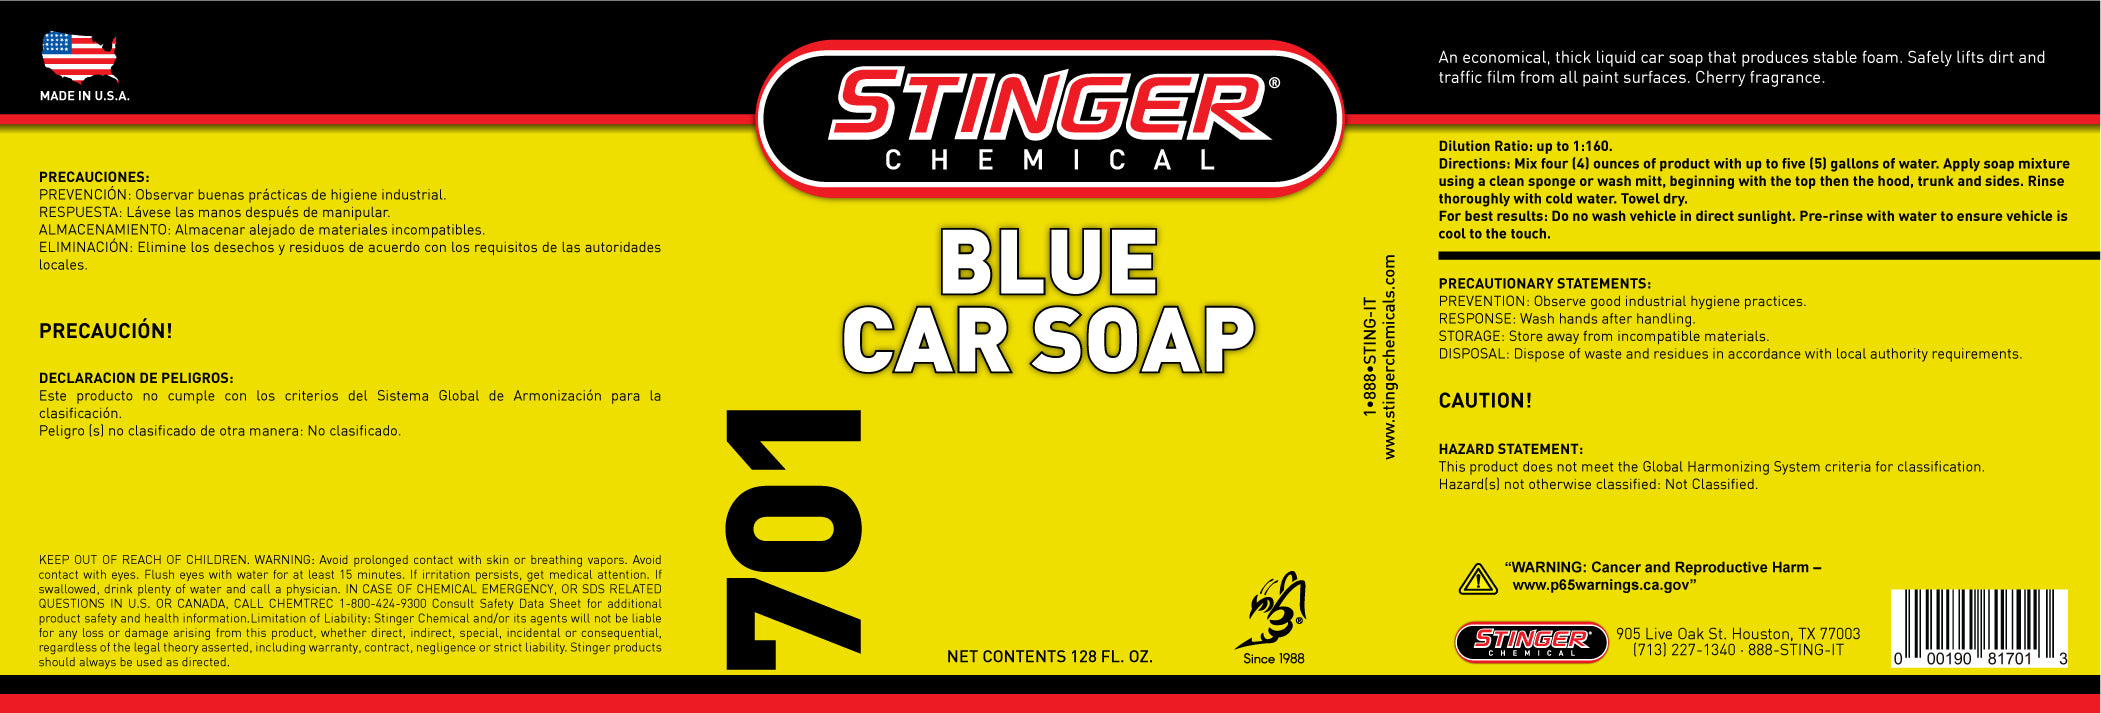 stinger-701-label